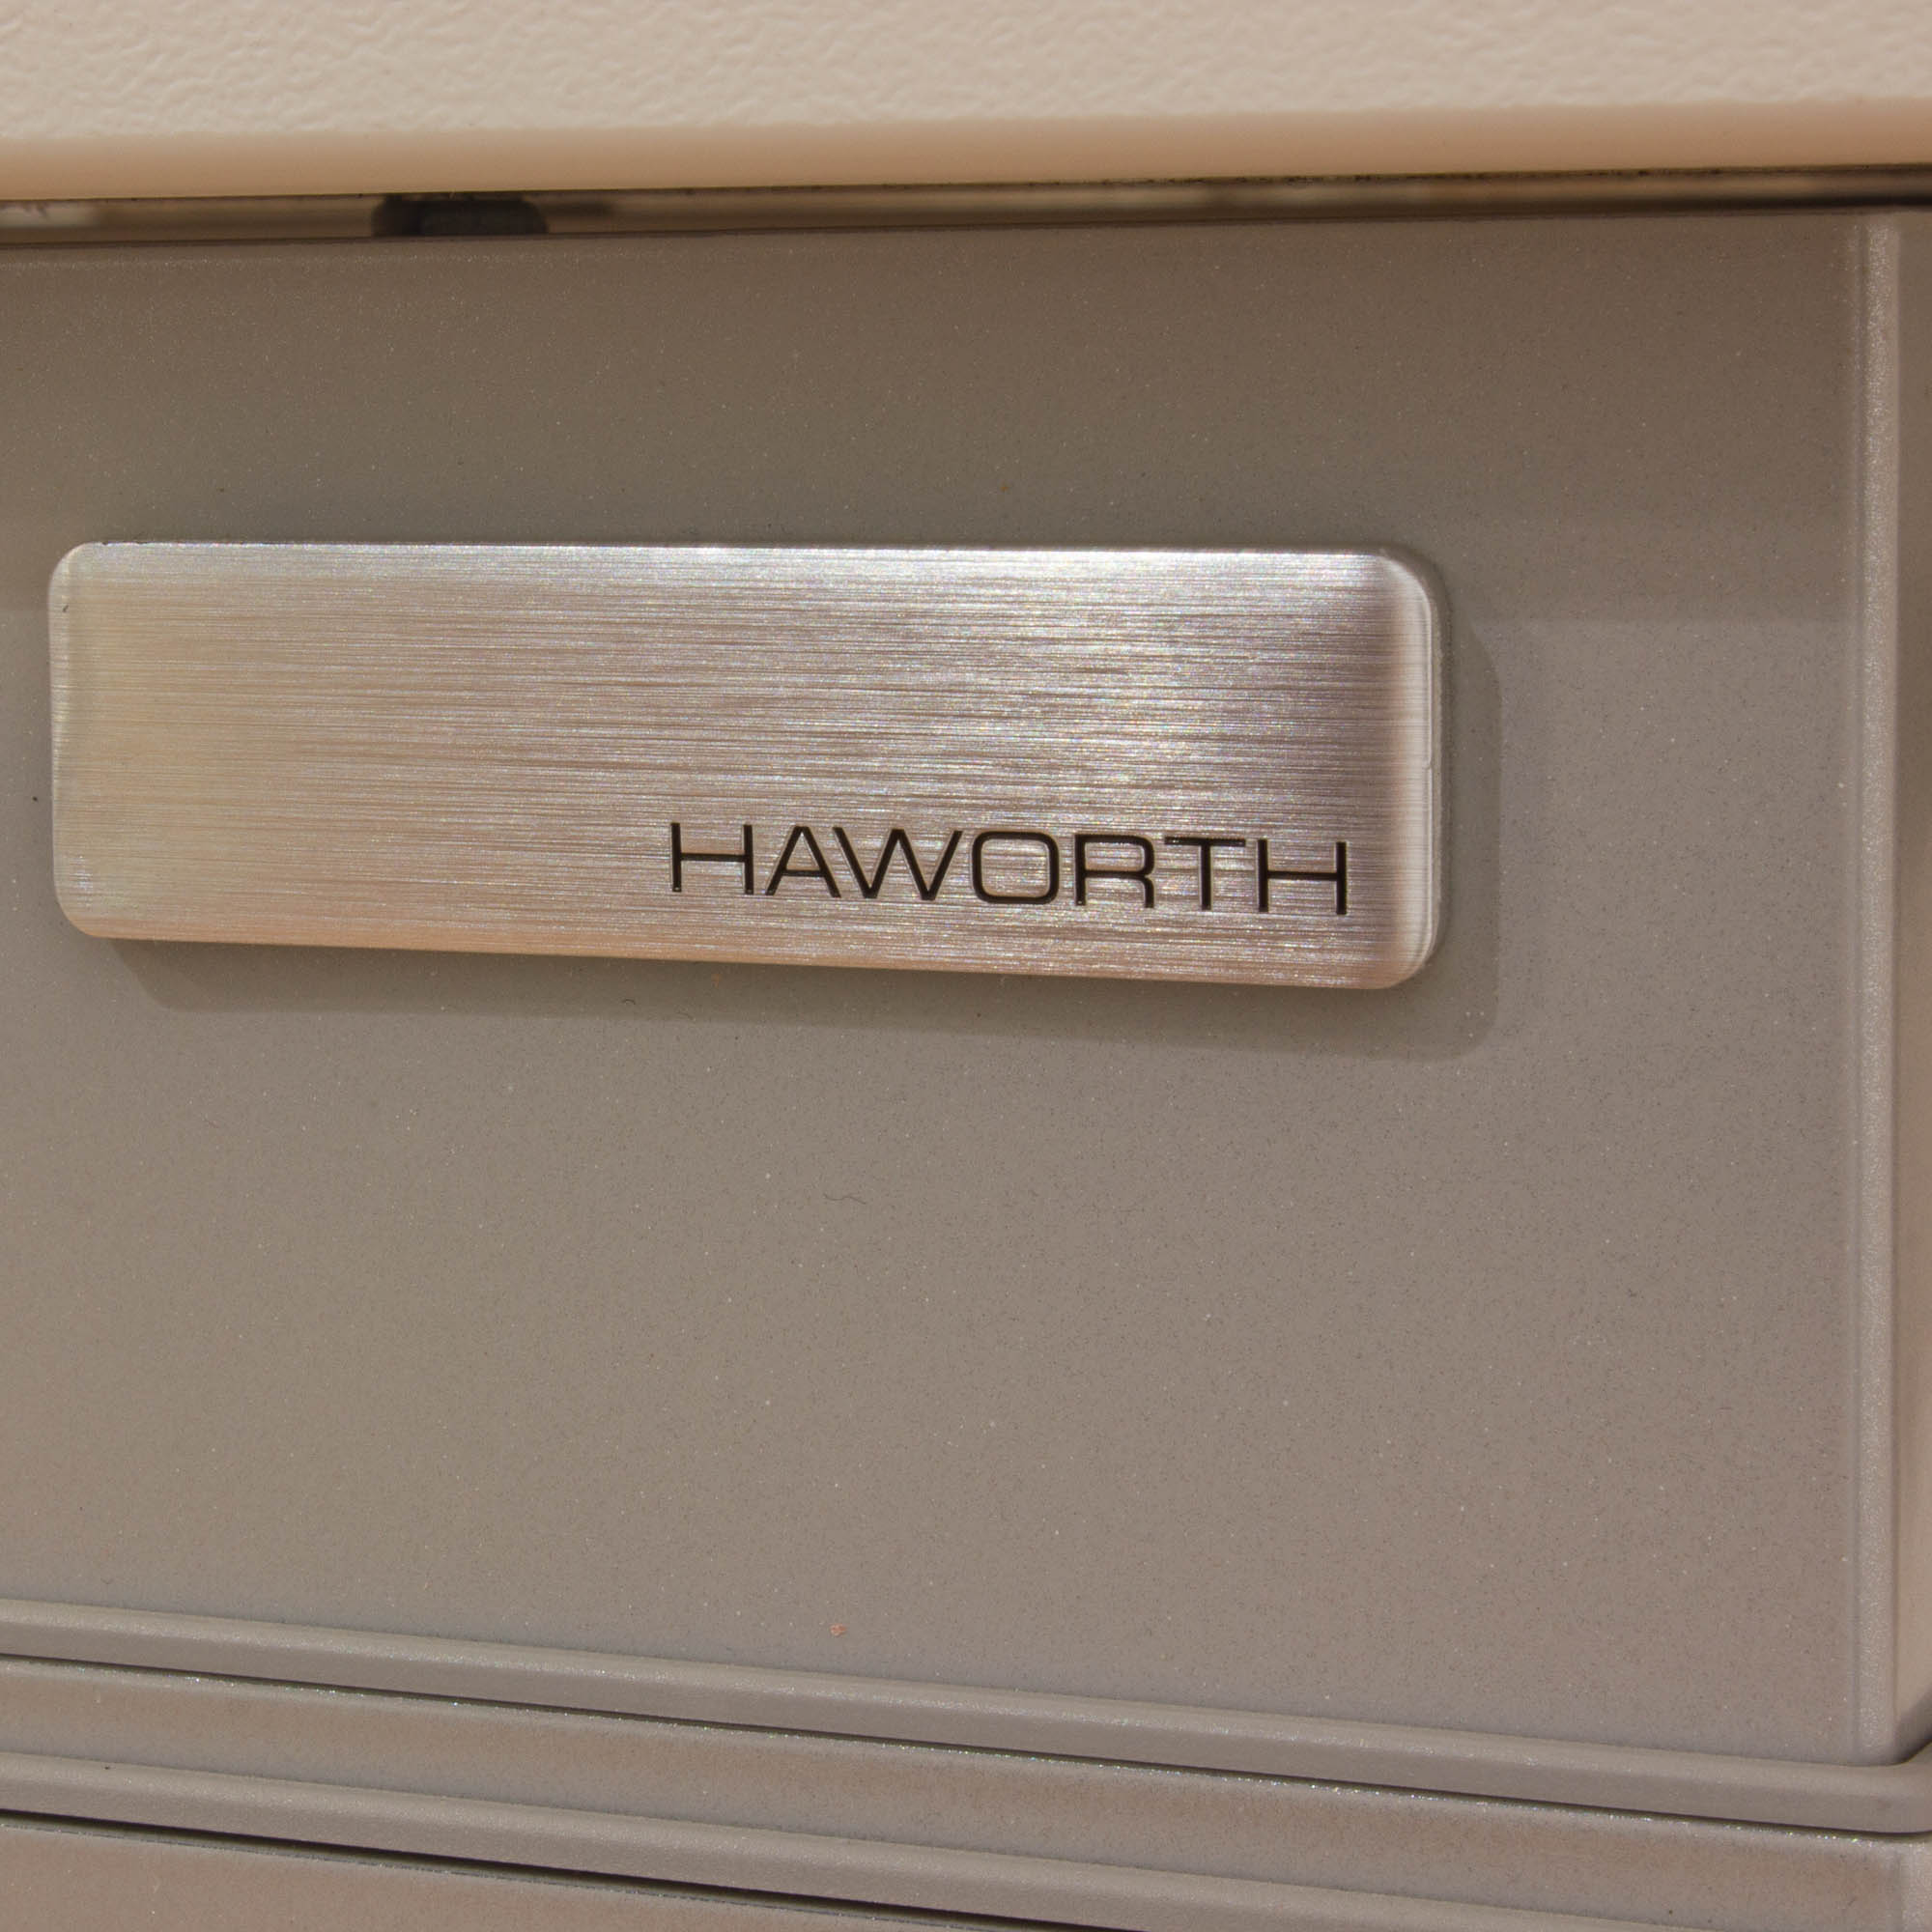 Haworth E-Tisch "Your Place" 160x80 cm lichtgrau - C-Fußgestell silber